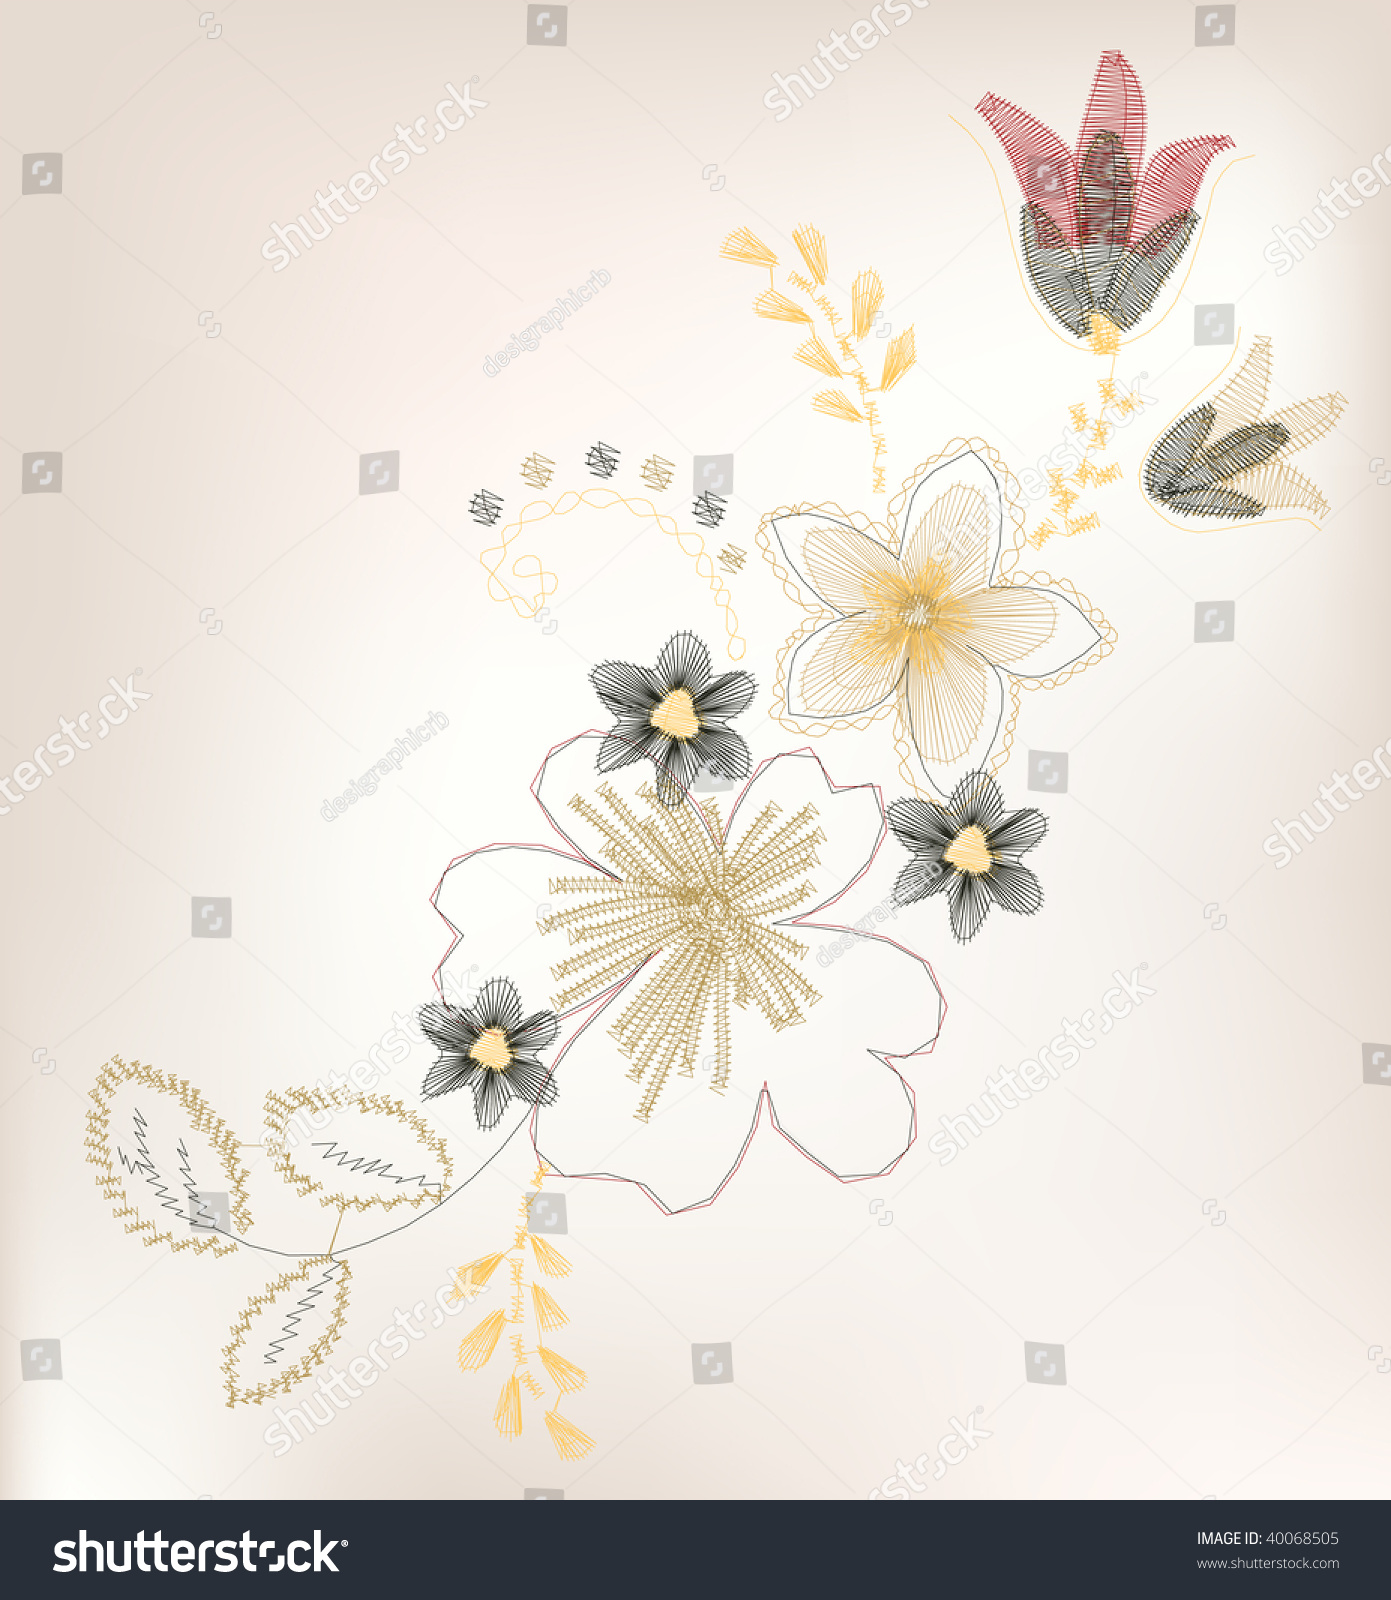 Vector Vintage Flower - 40068505 : Shutterstock